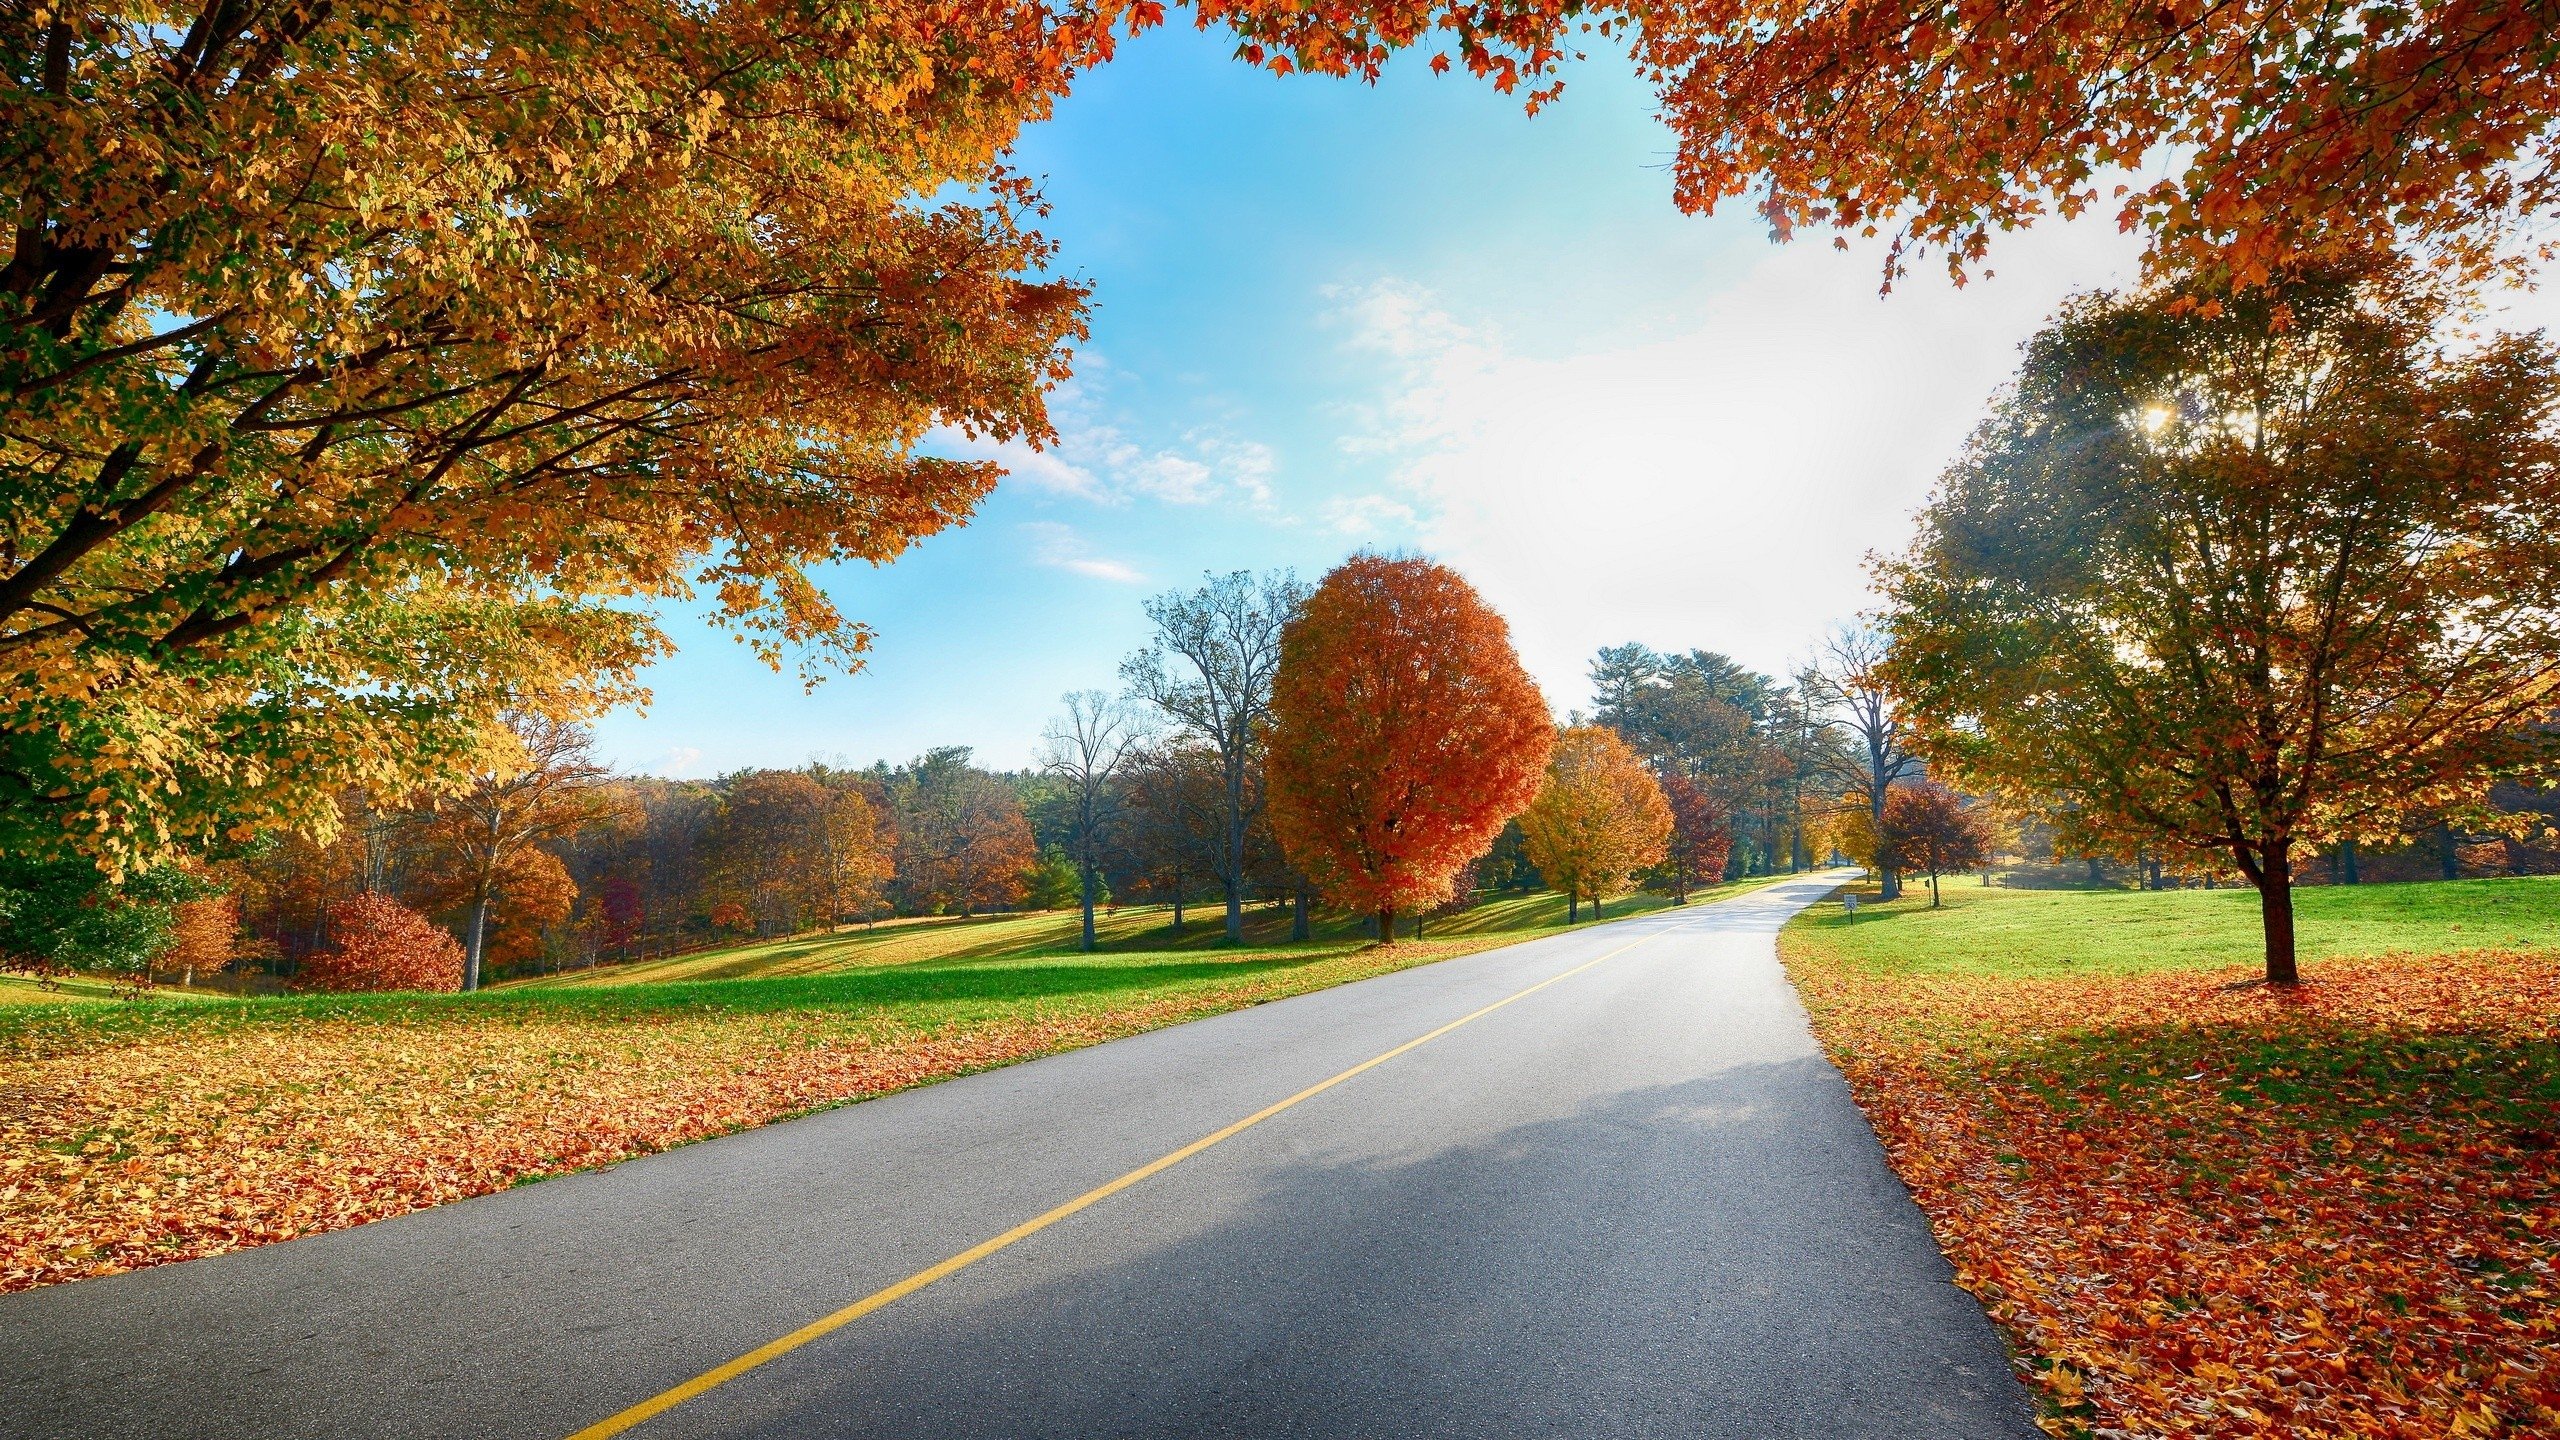 Road Markings Autumn Trees - Scenery Image Download Hd - HD Wallpaper 